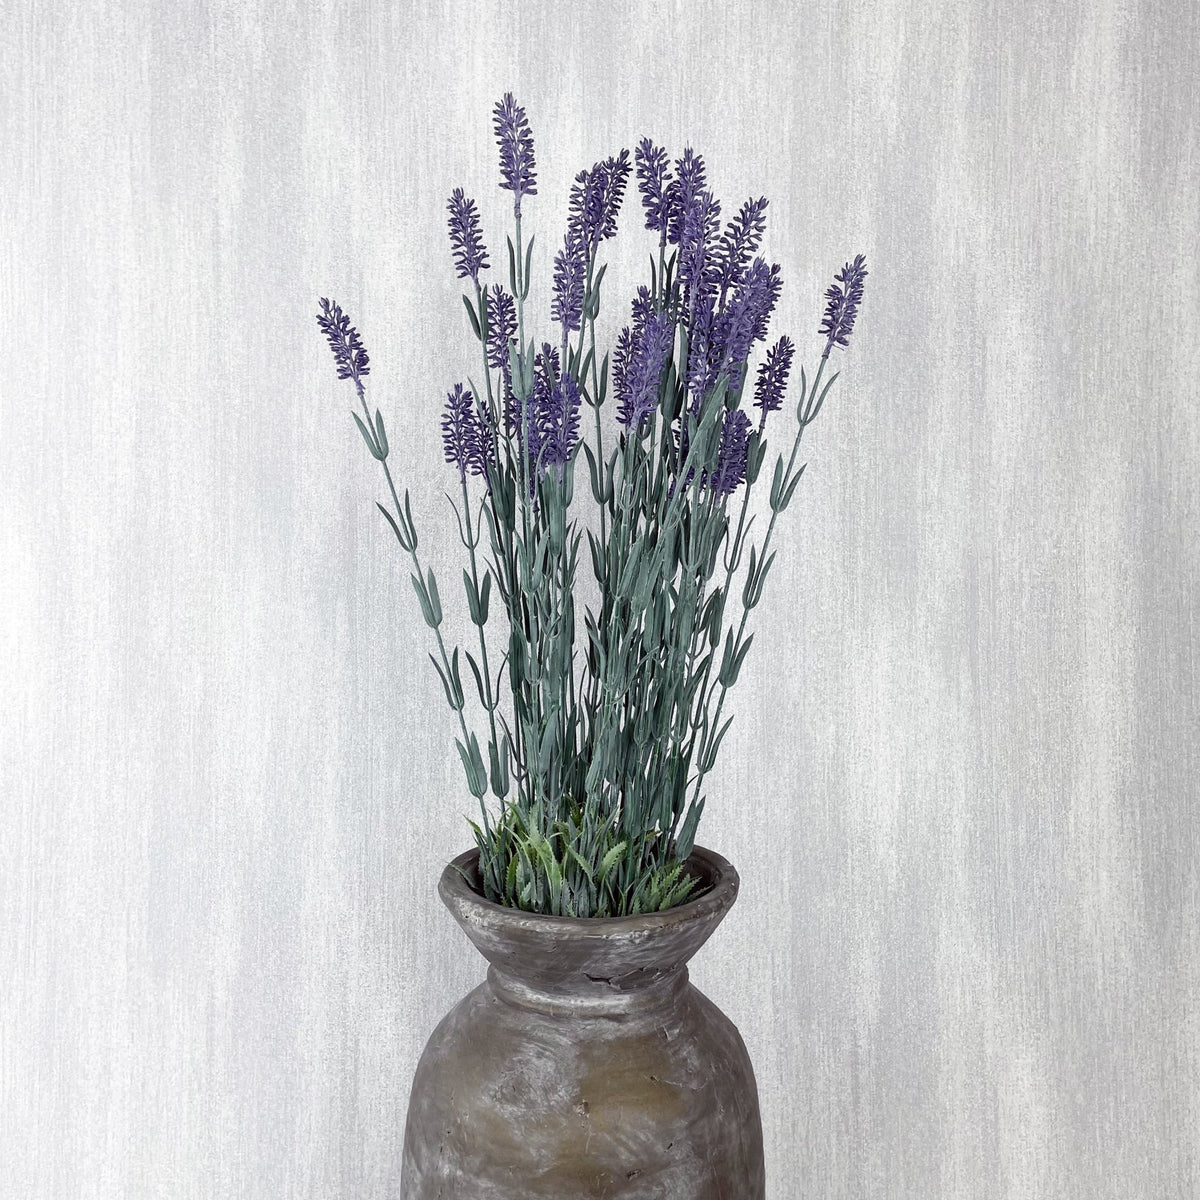 Large Lavender Spray in vintage vase